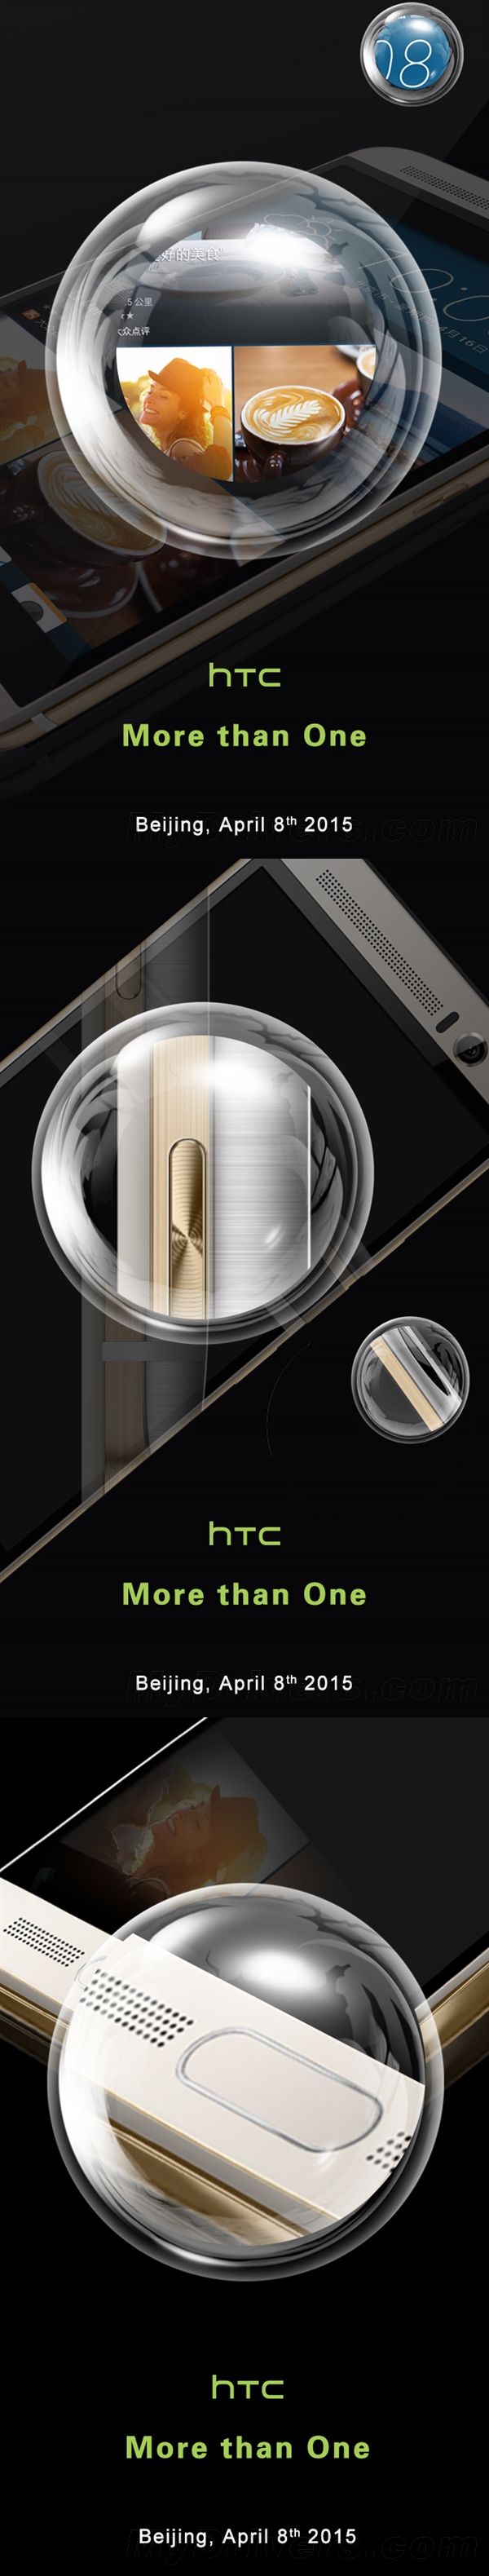 HTC One M9 Plus: hivatalos fotókon!